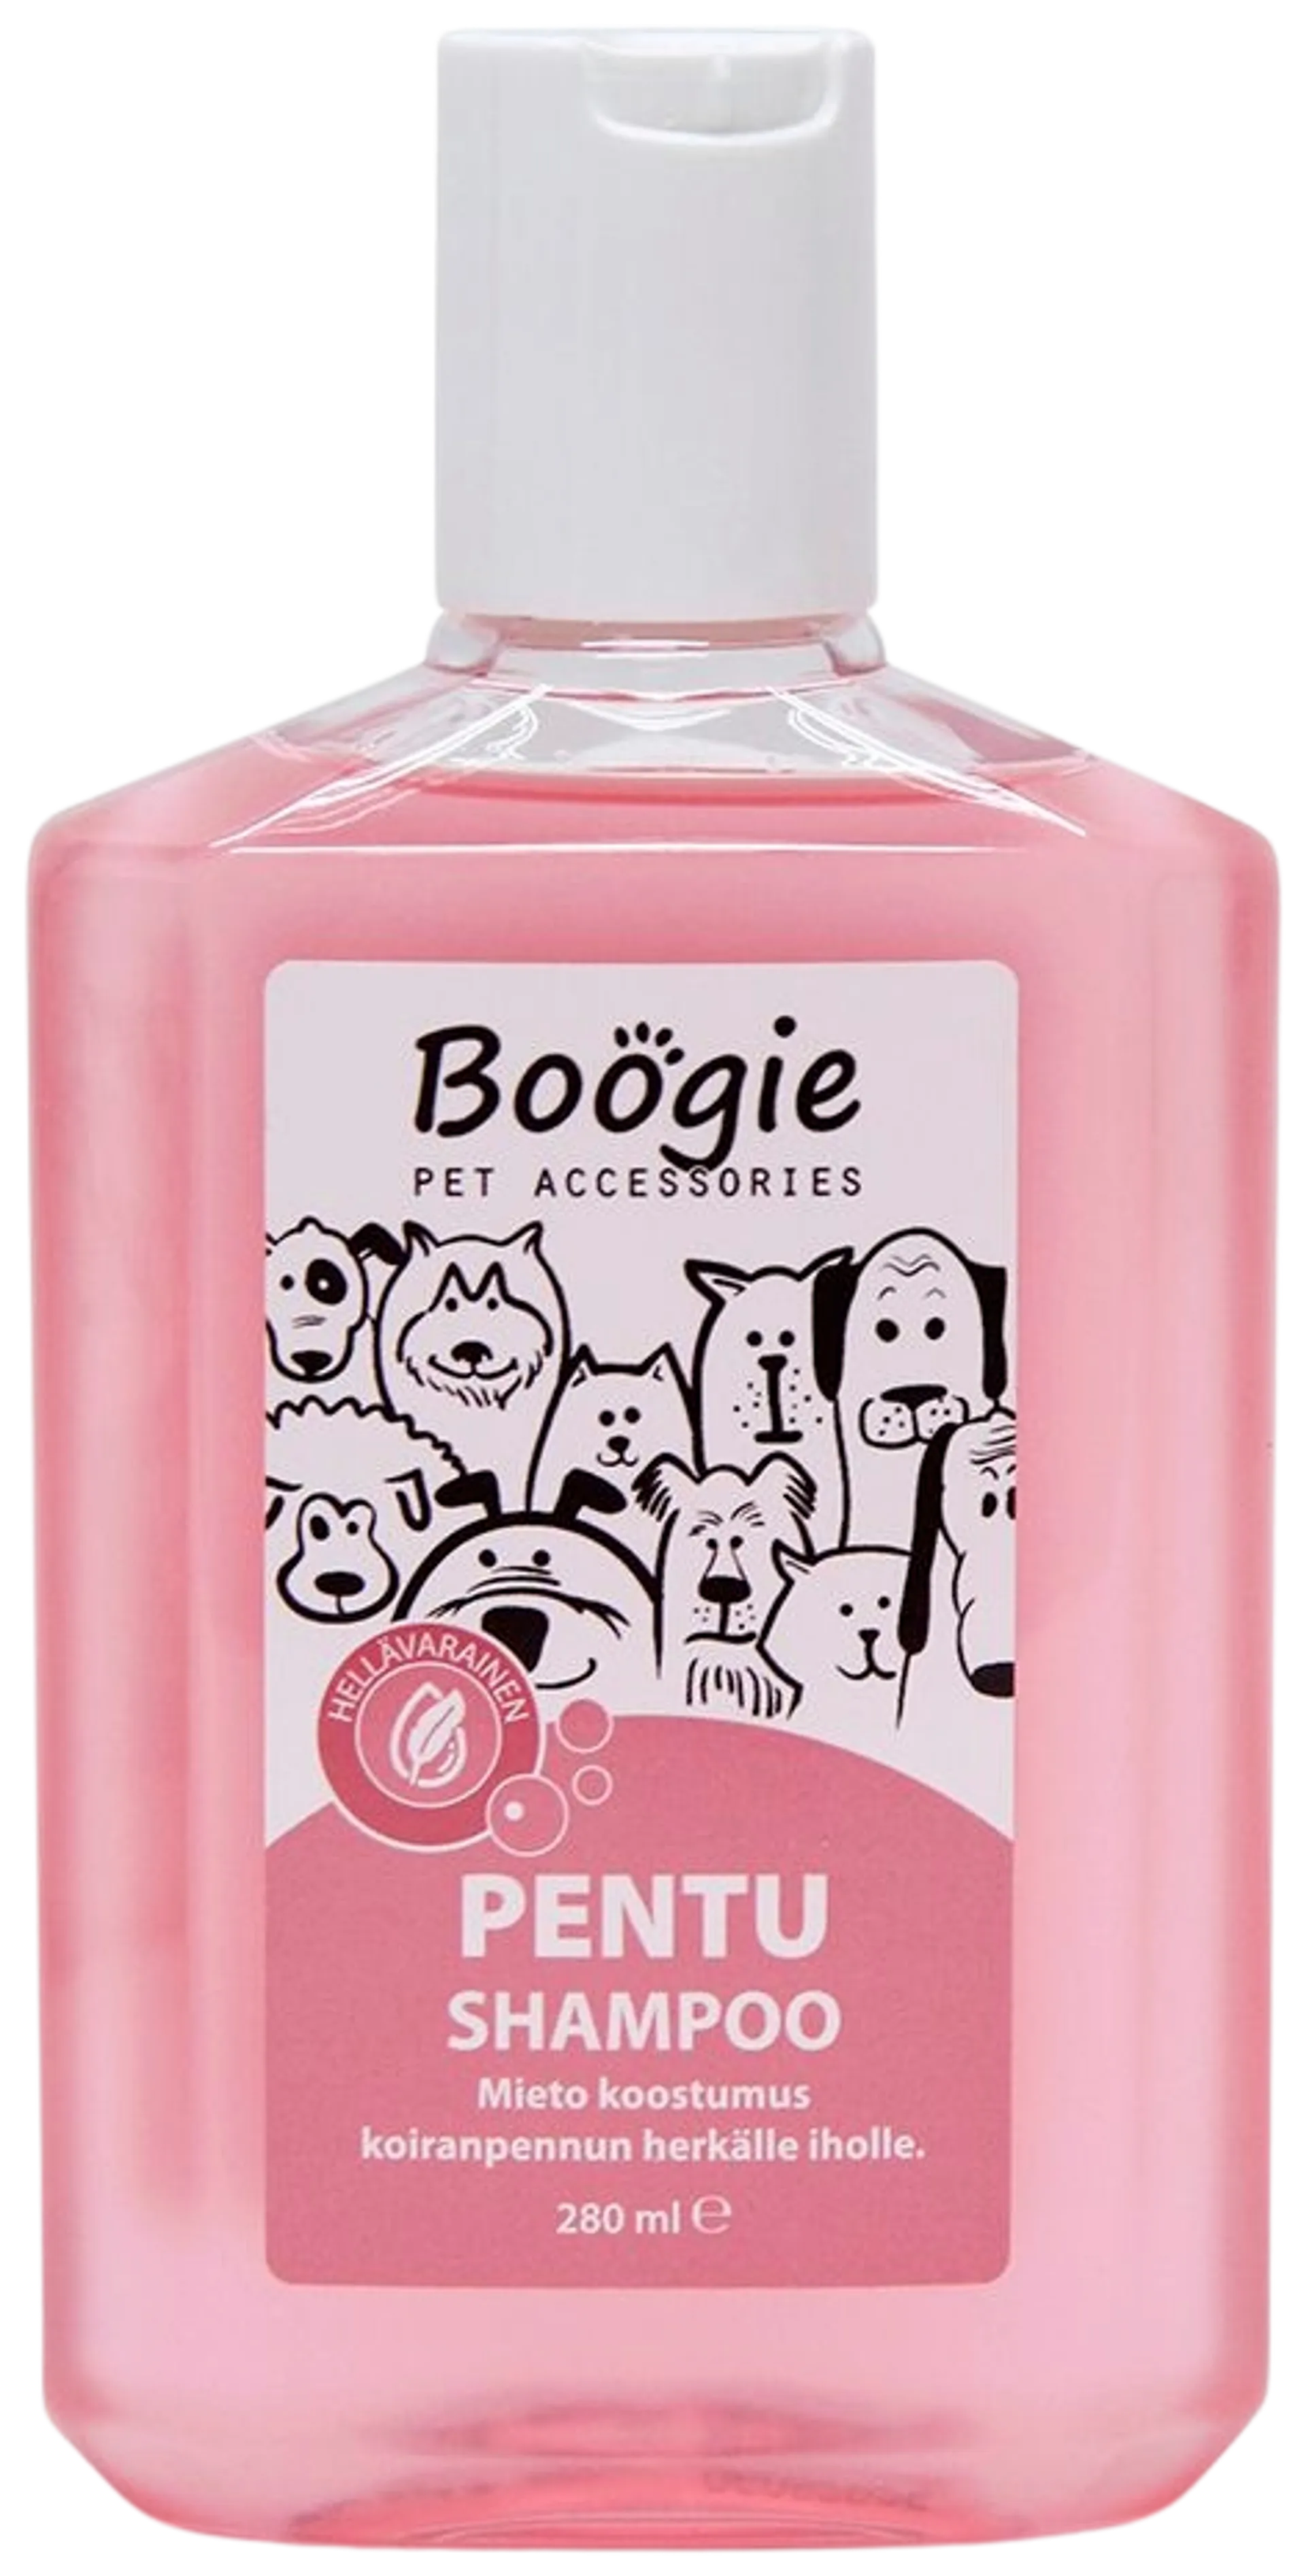 Boogie Pentushampoo, 280 ml